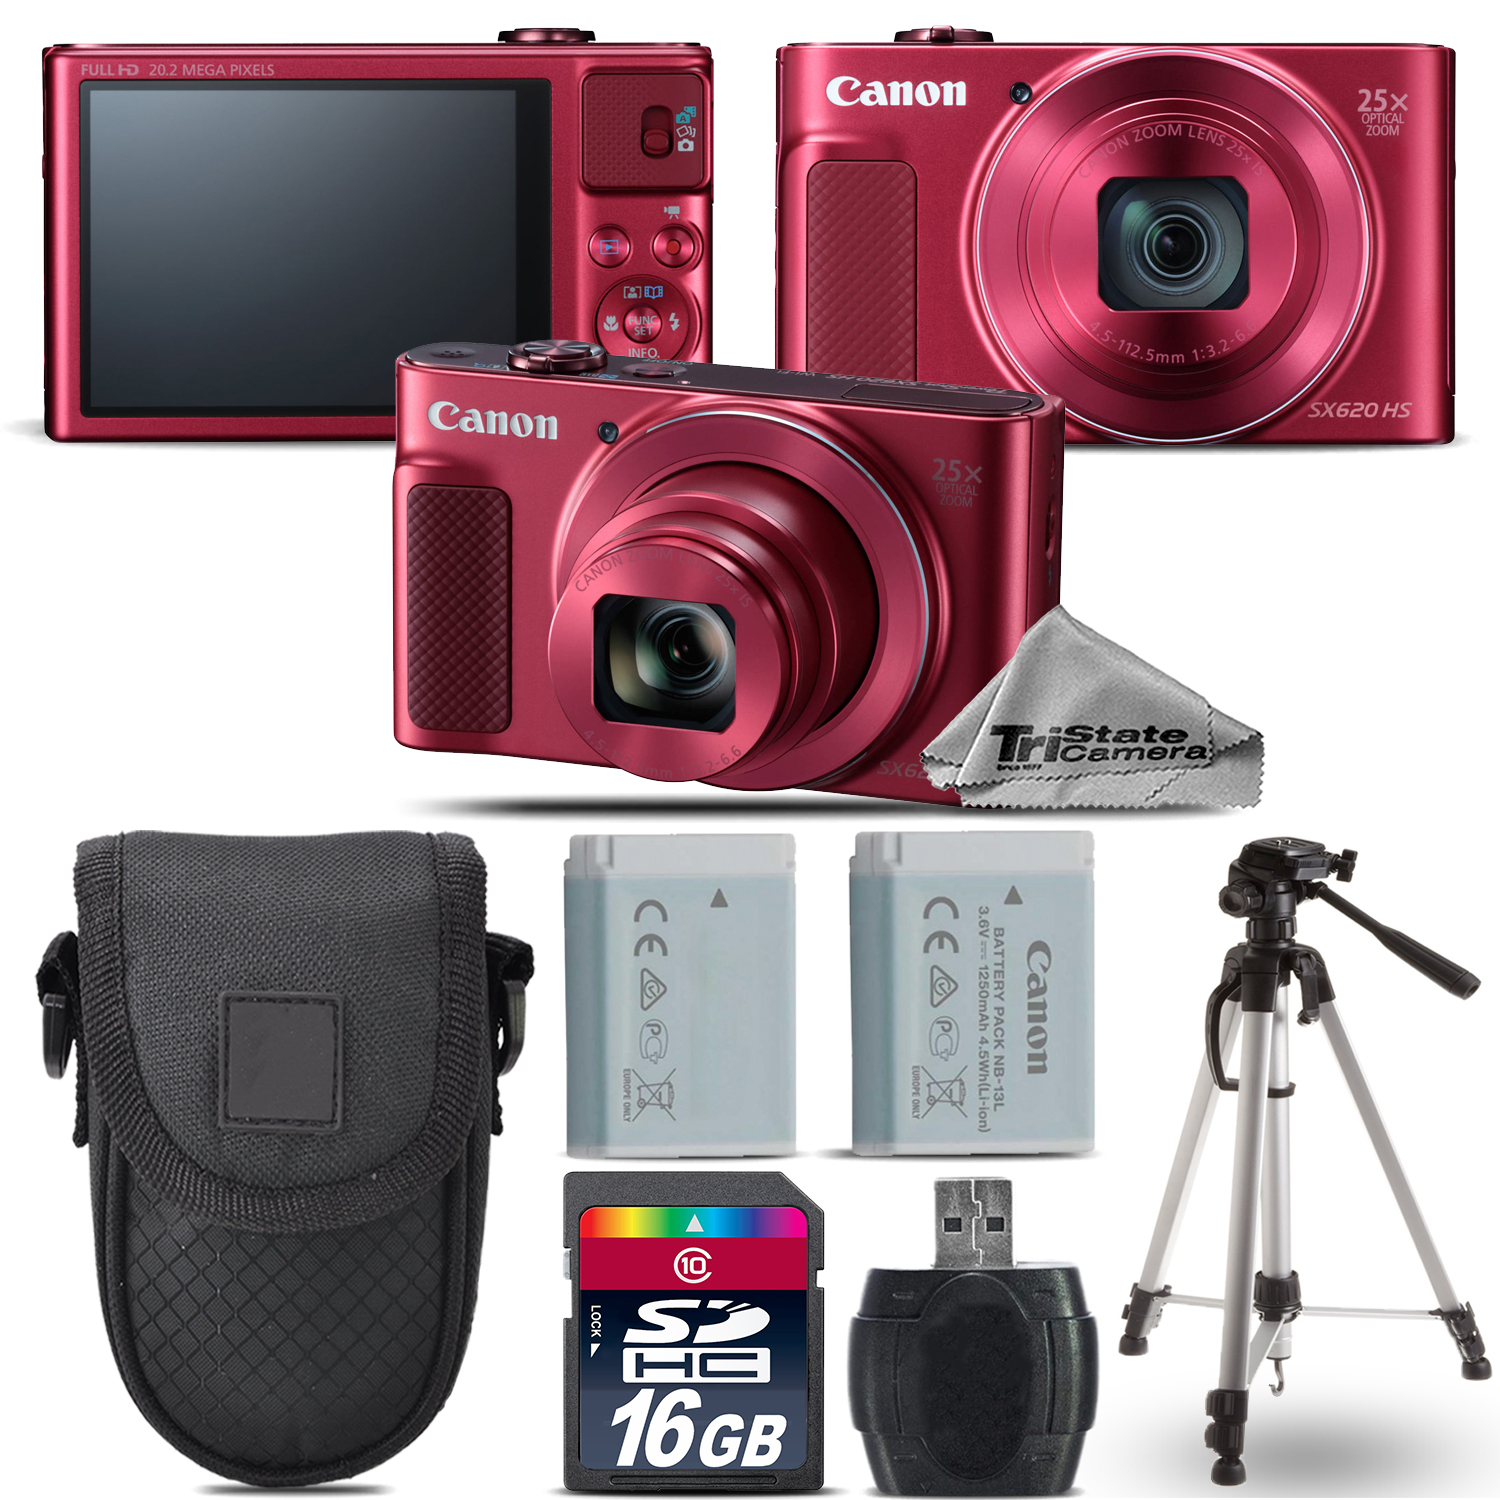 PowerShot SX620 HS Camera (RED) + Extra Battery +Tripod + Case -16GB Kit *FREE SHIPPING*